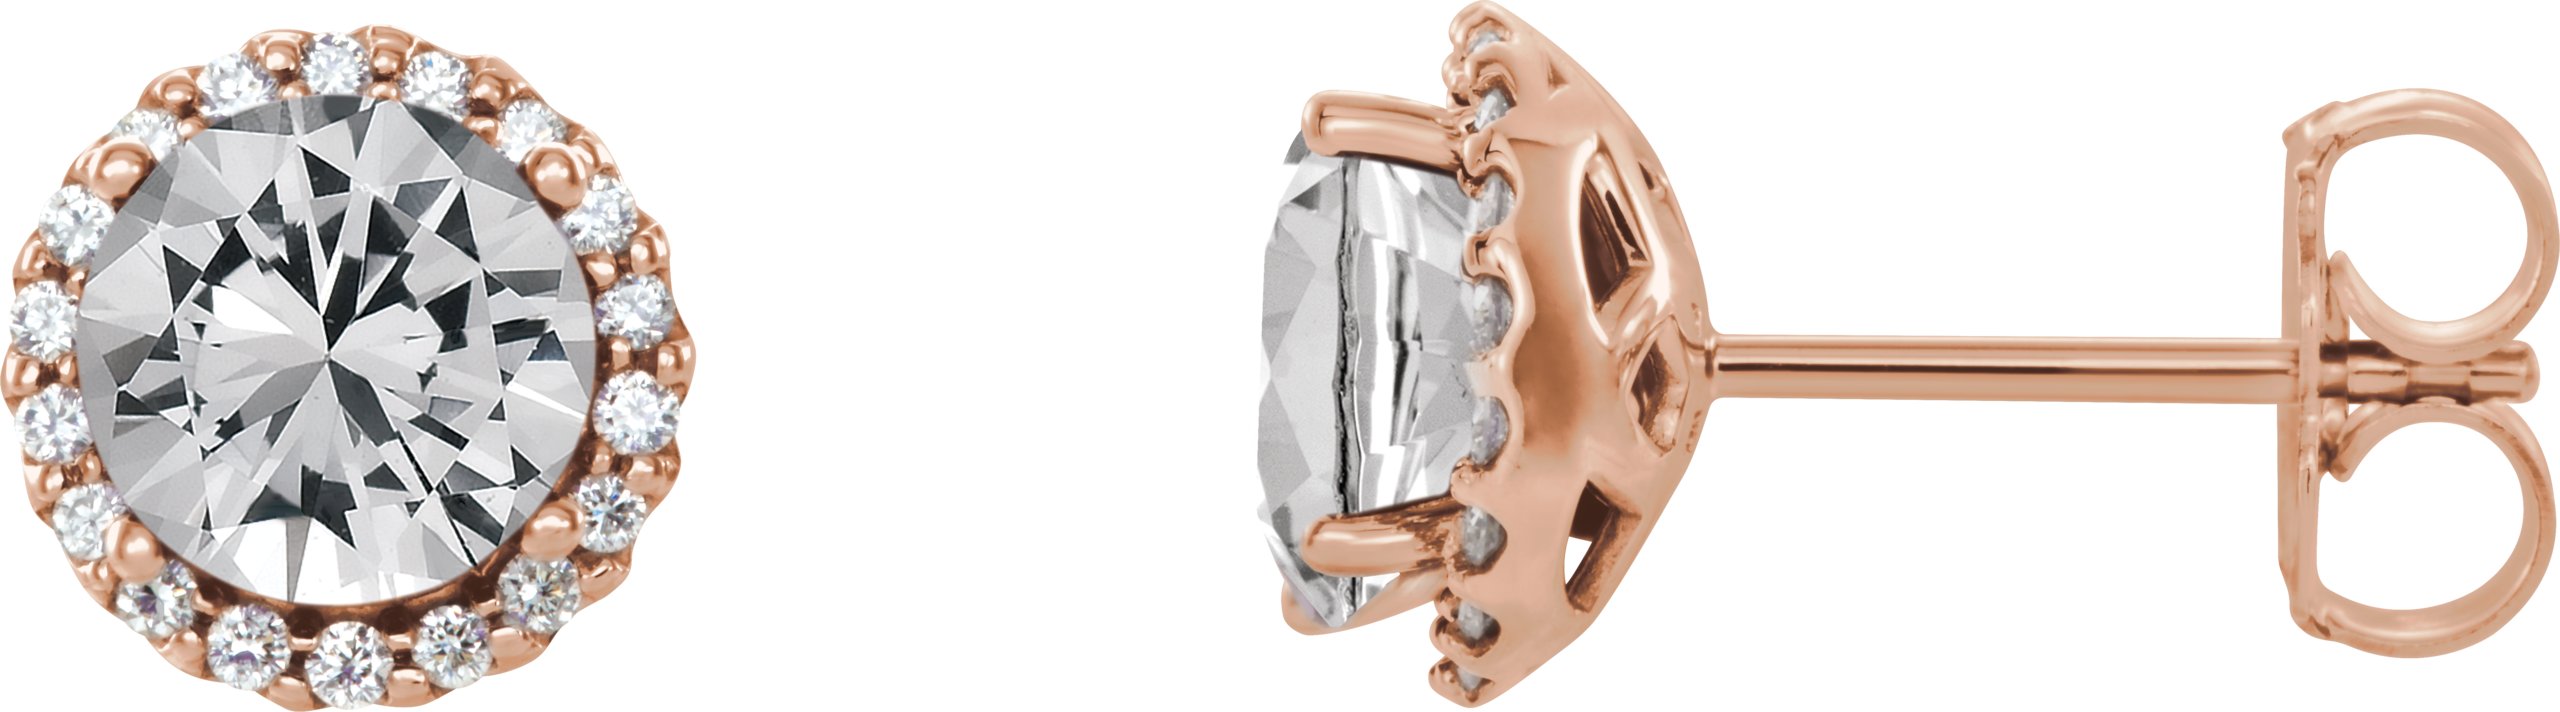 14K Rose .33 CTW Diamond Earrings Ref 14107576